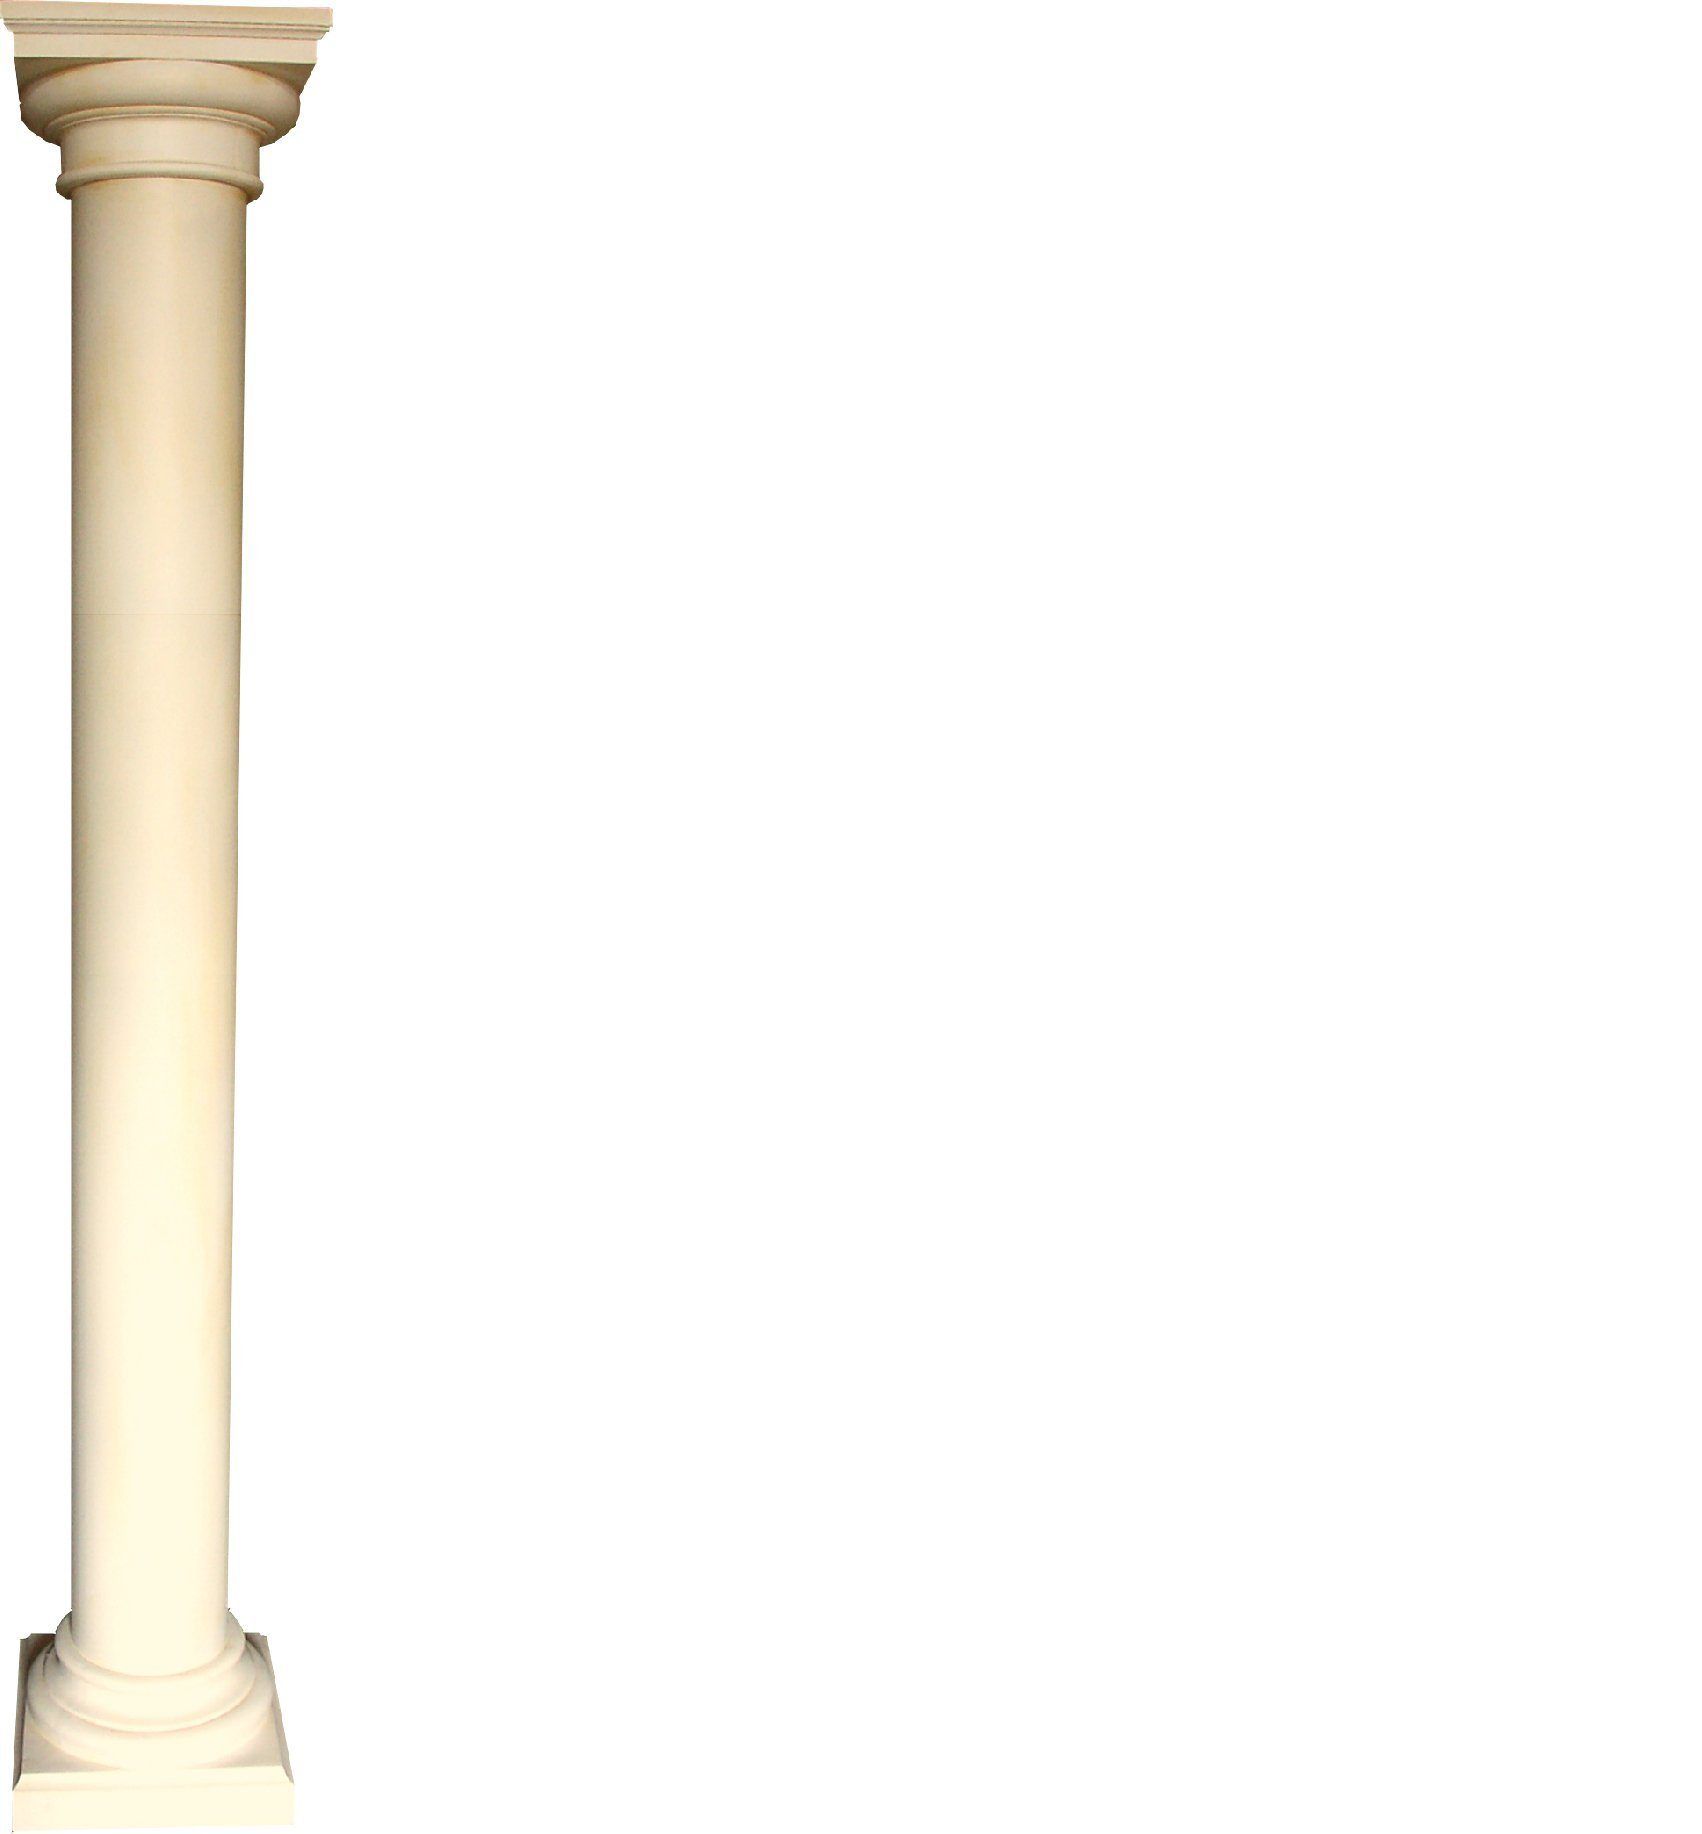 Griechische Stützen Stil Neu Skulptur JVmoebel XXL Luxus Säulen 210cm Antik Säule Groß